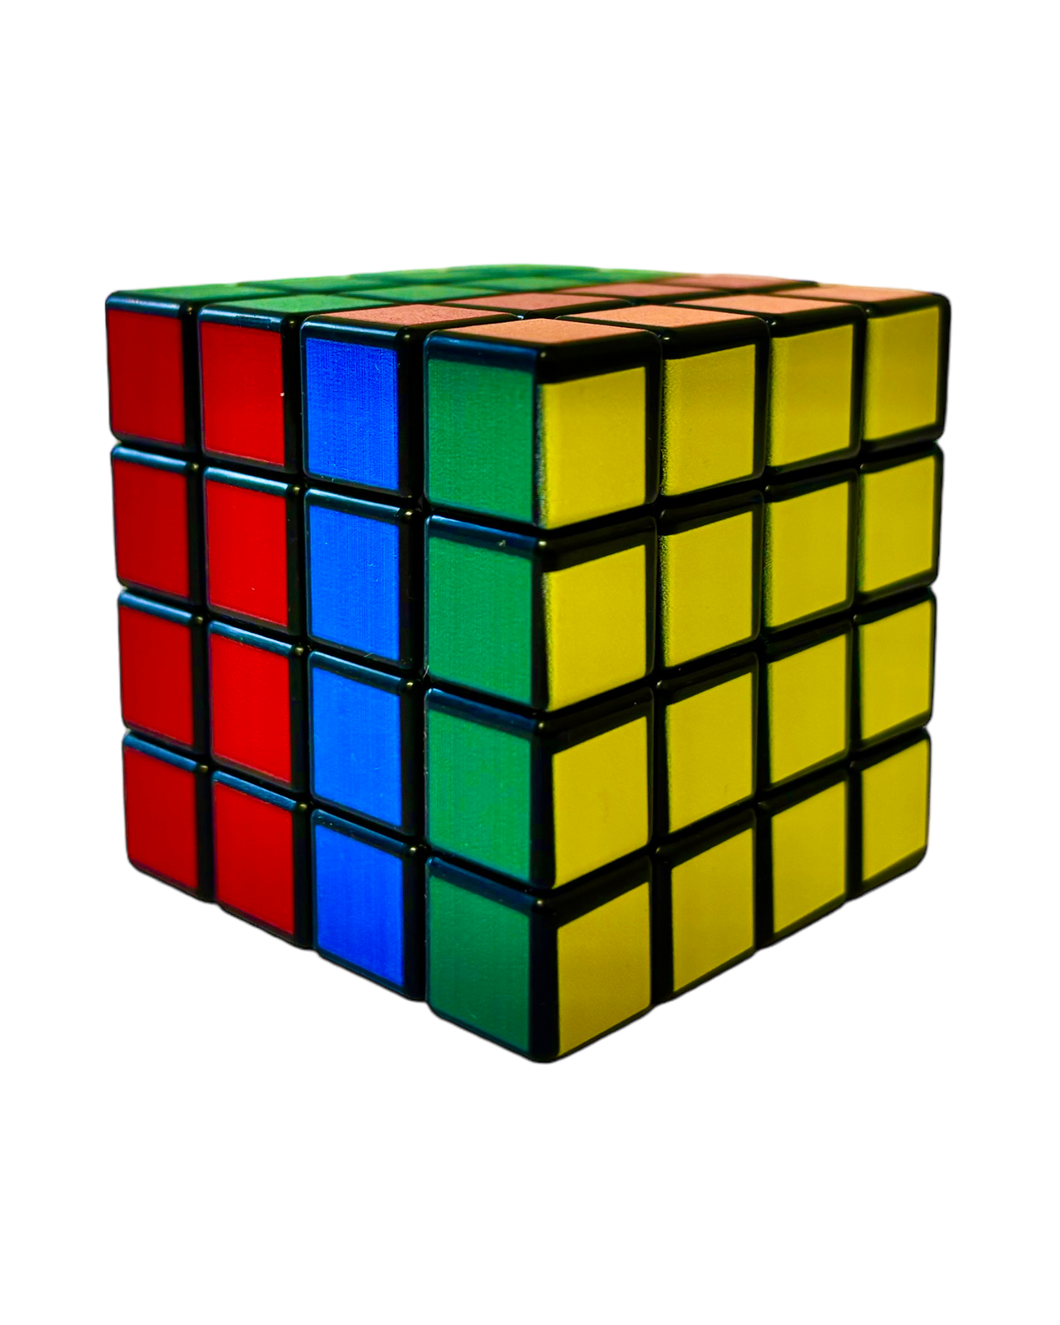 A Rubik's Cube 4-Piece Grinder.